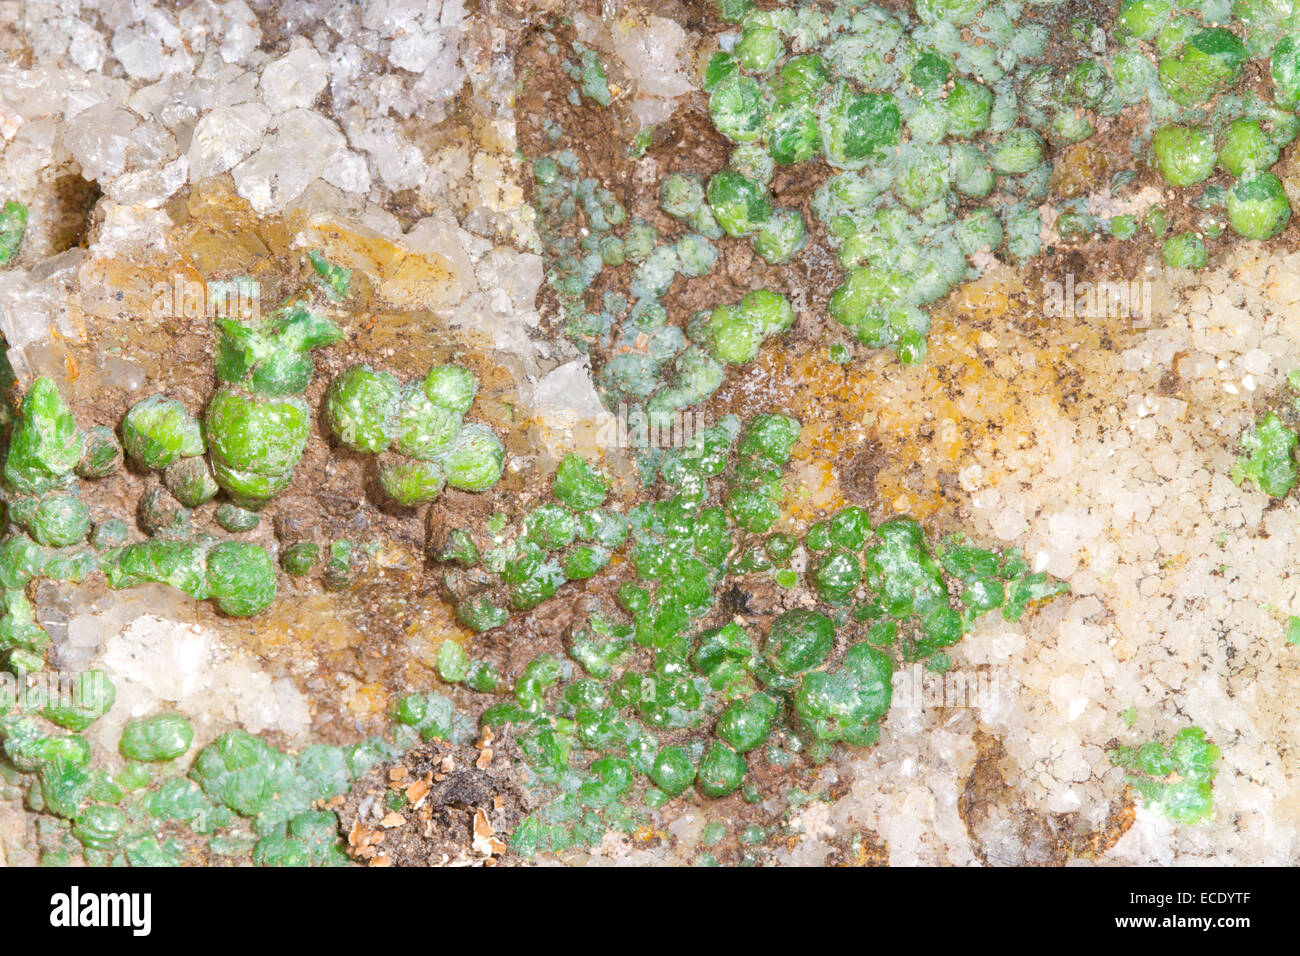 Mineralien - Pyromorphite (Lead Chlorophosphate) grüne kristalline Mineral auf Quarz. Herkunft-Mid-Wales-Orefield. Stockfoto